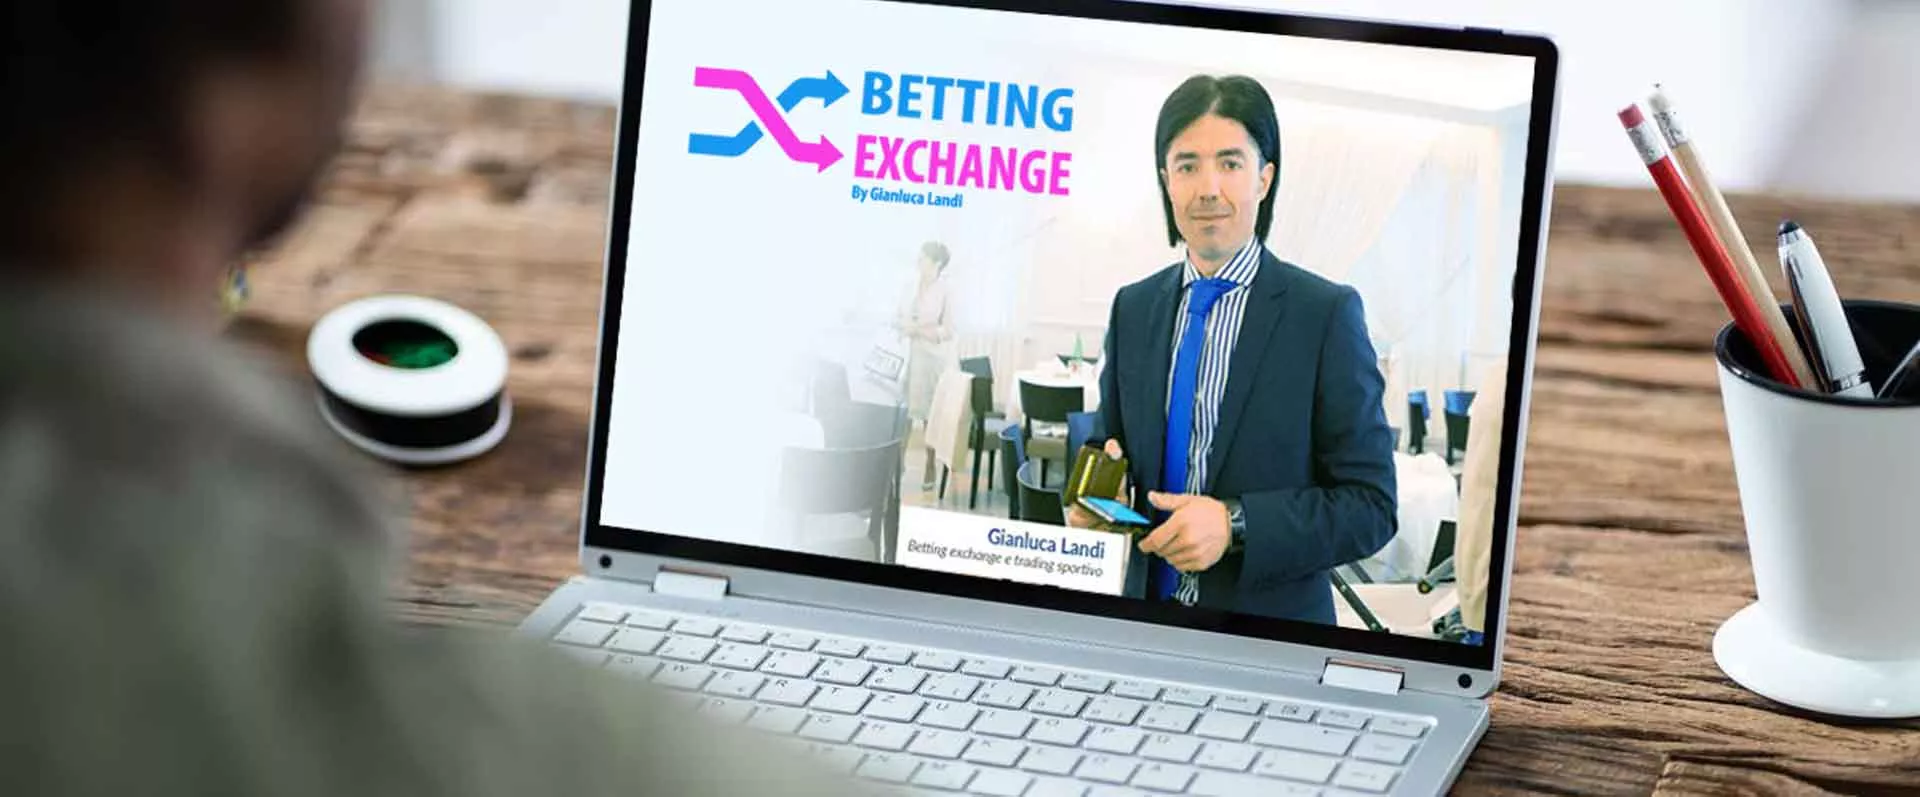 Corsi Online di betting Exchange